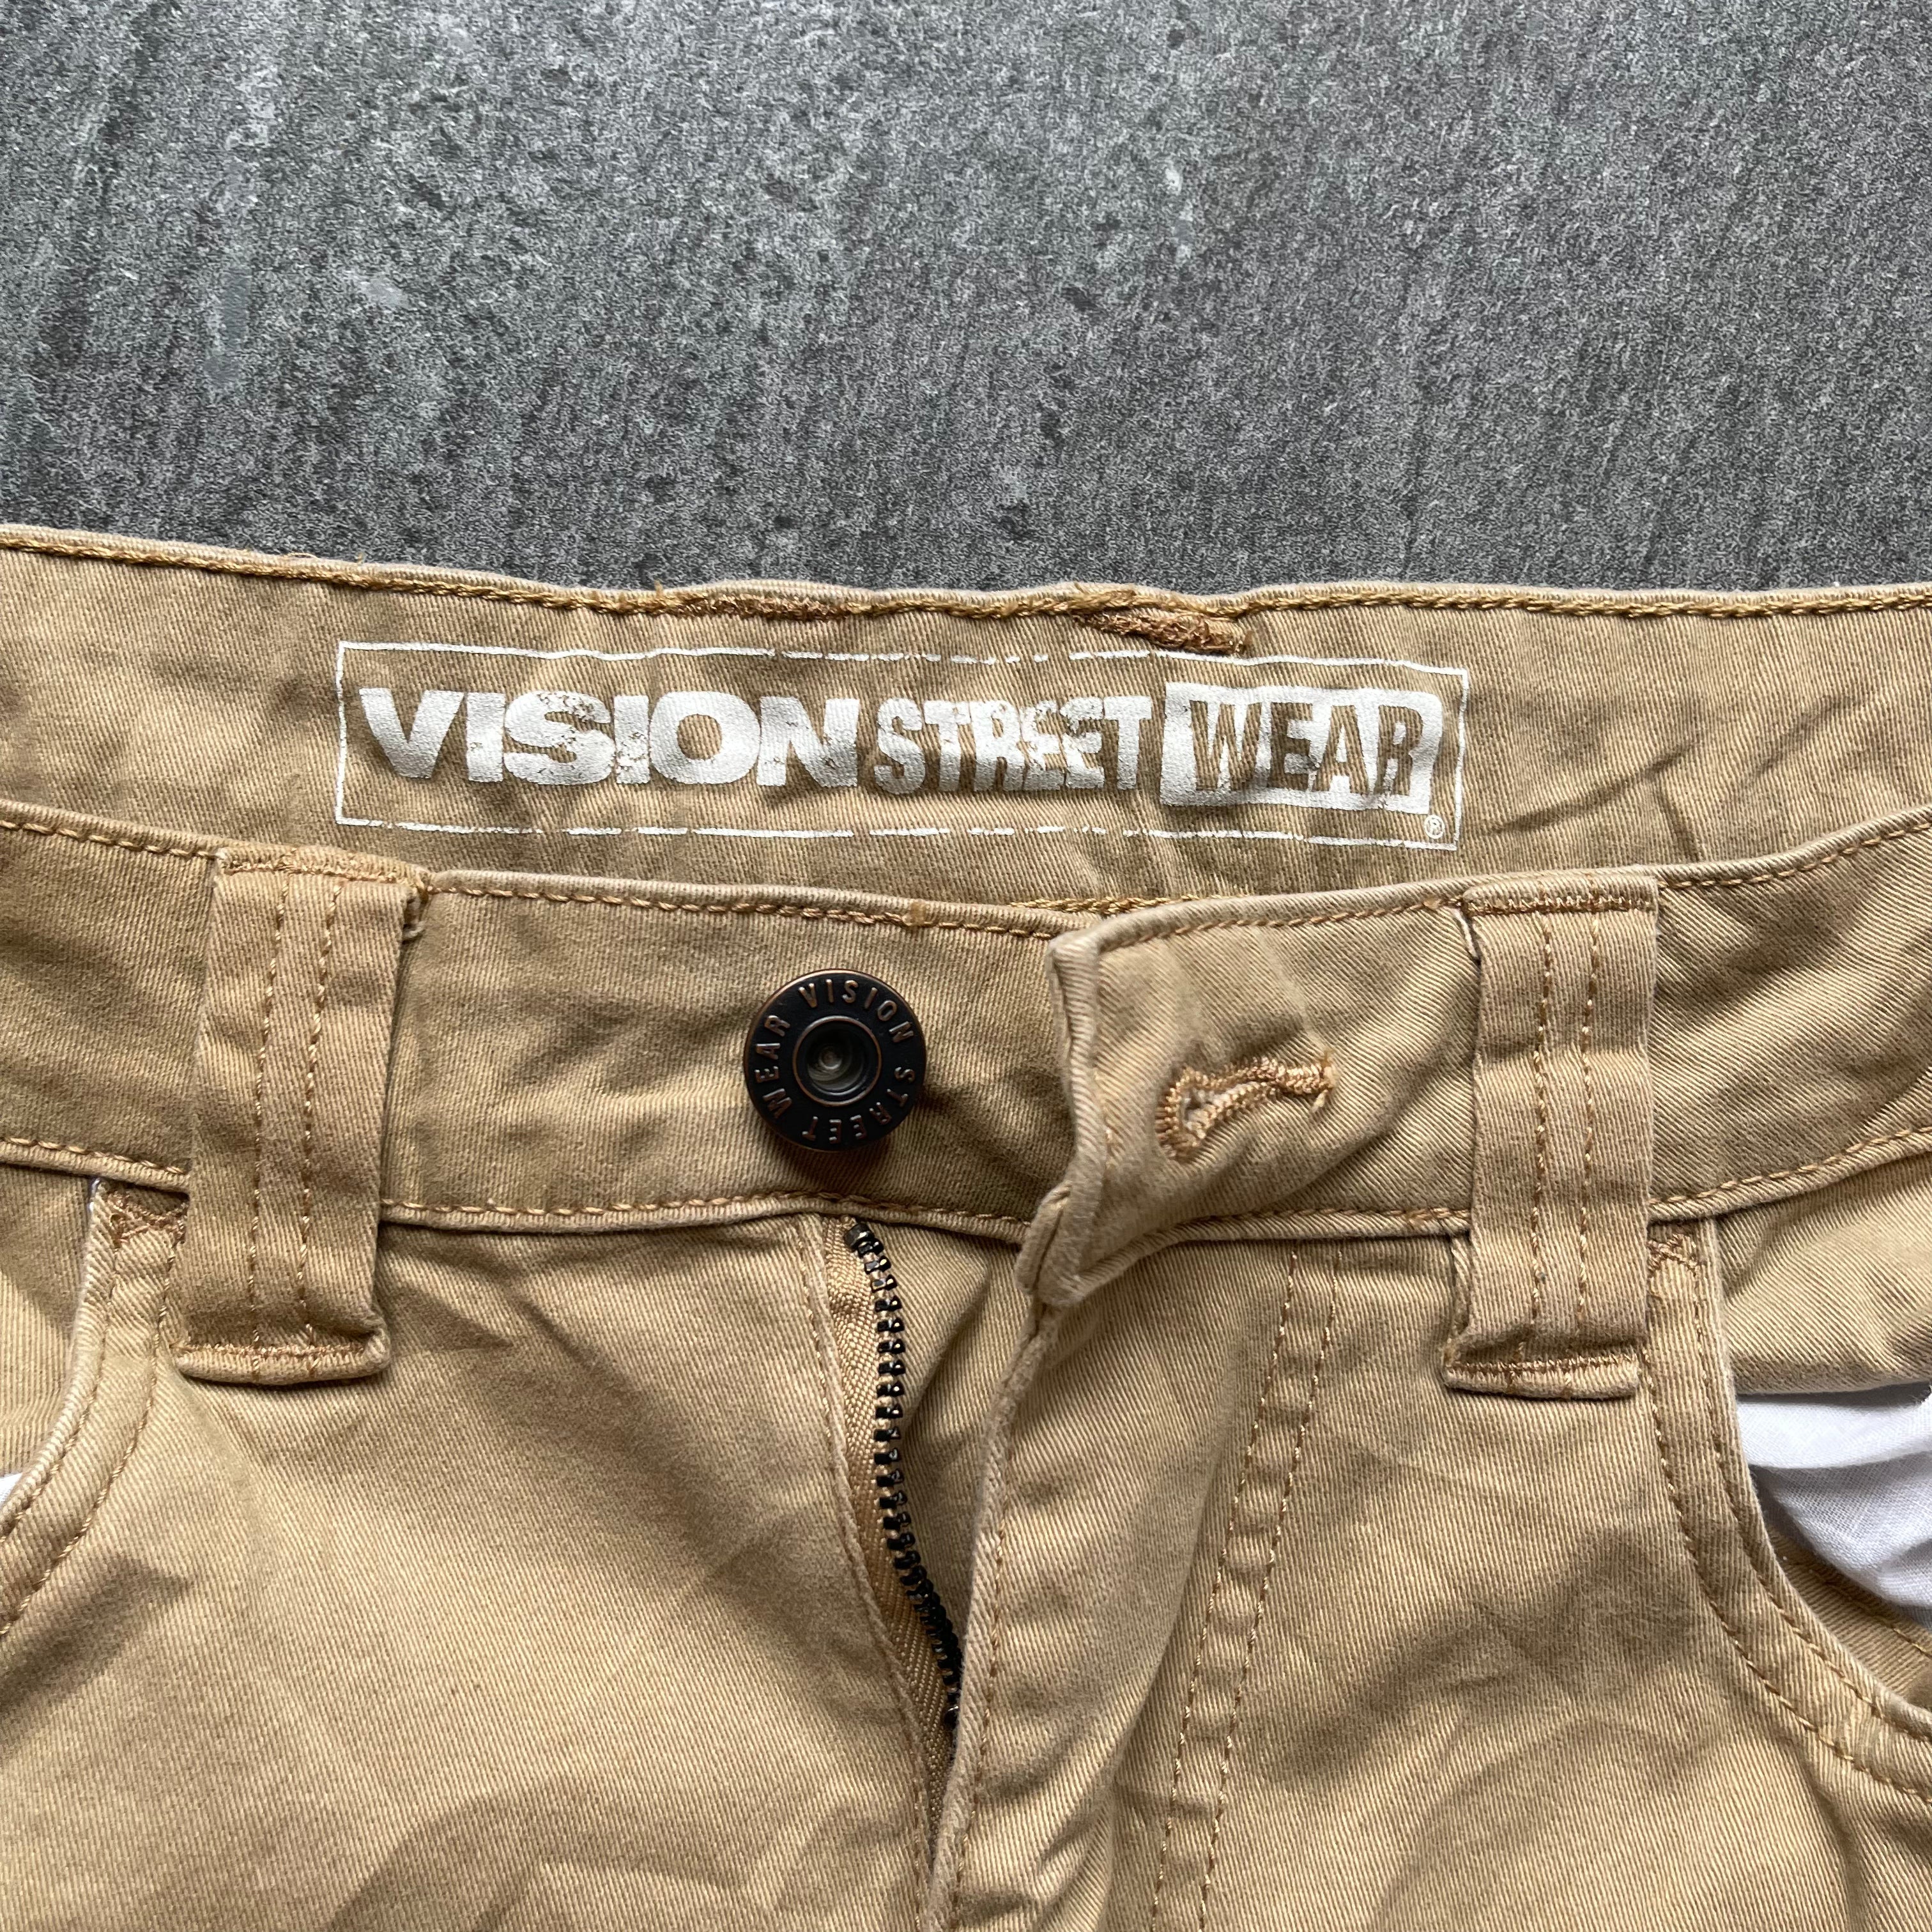 Vintage Vision Street Wear Cargo Pants - Size 34x29